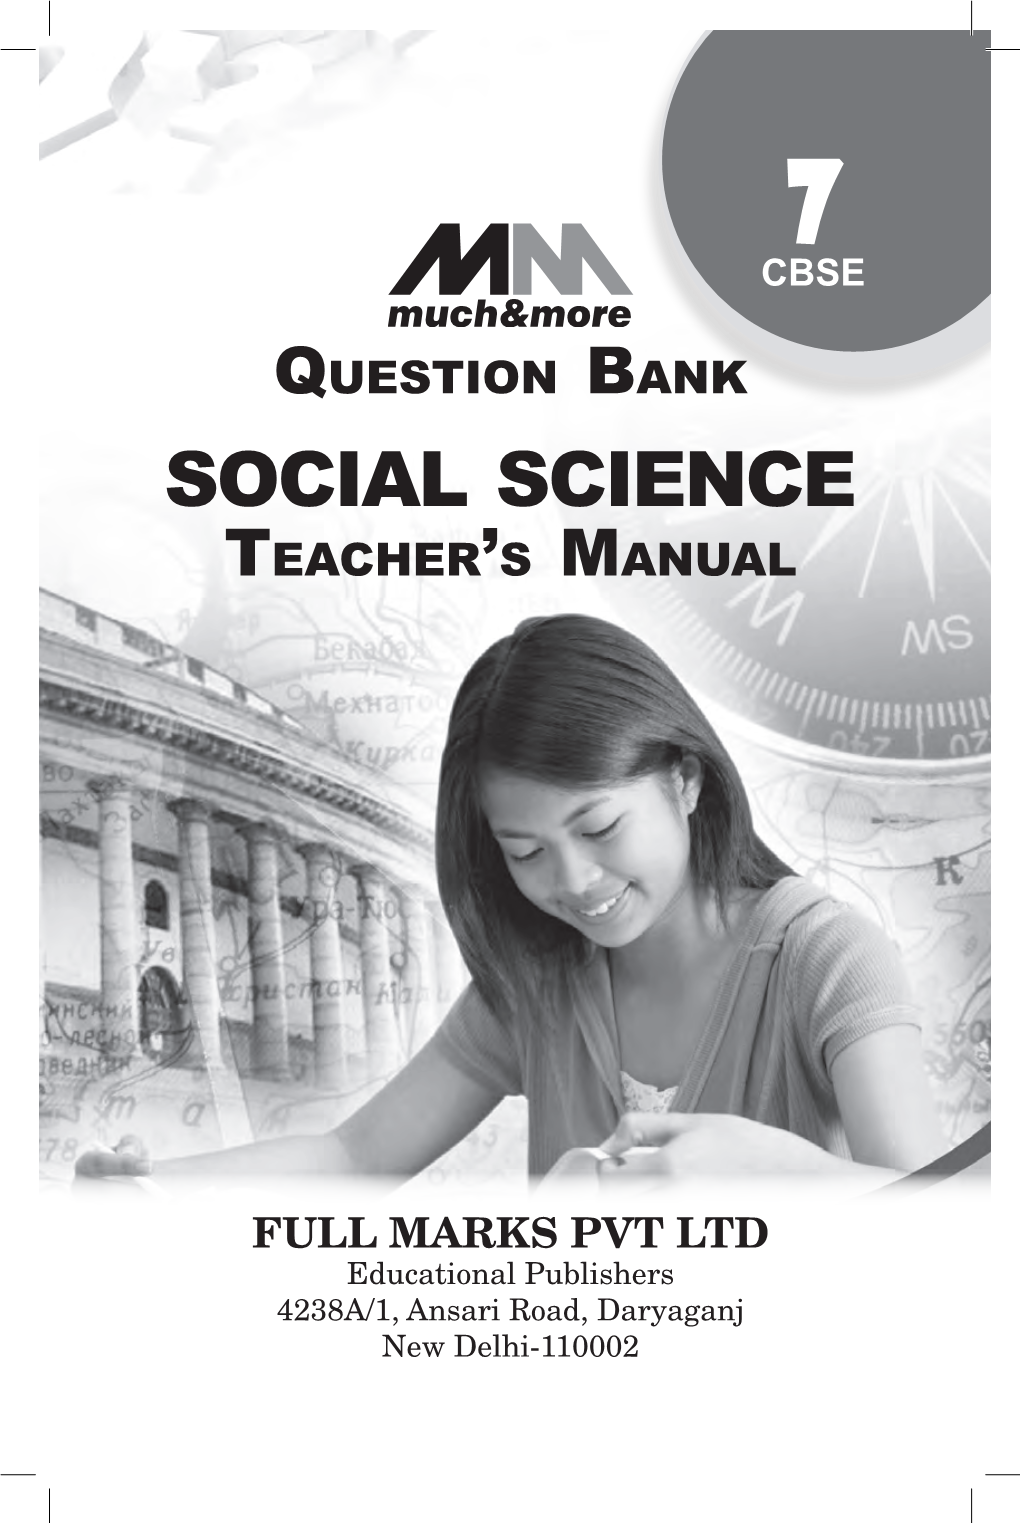 SOCIAL SCIENCE Teacher’S Manual